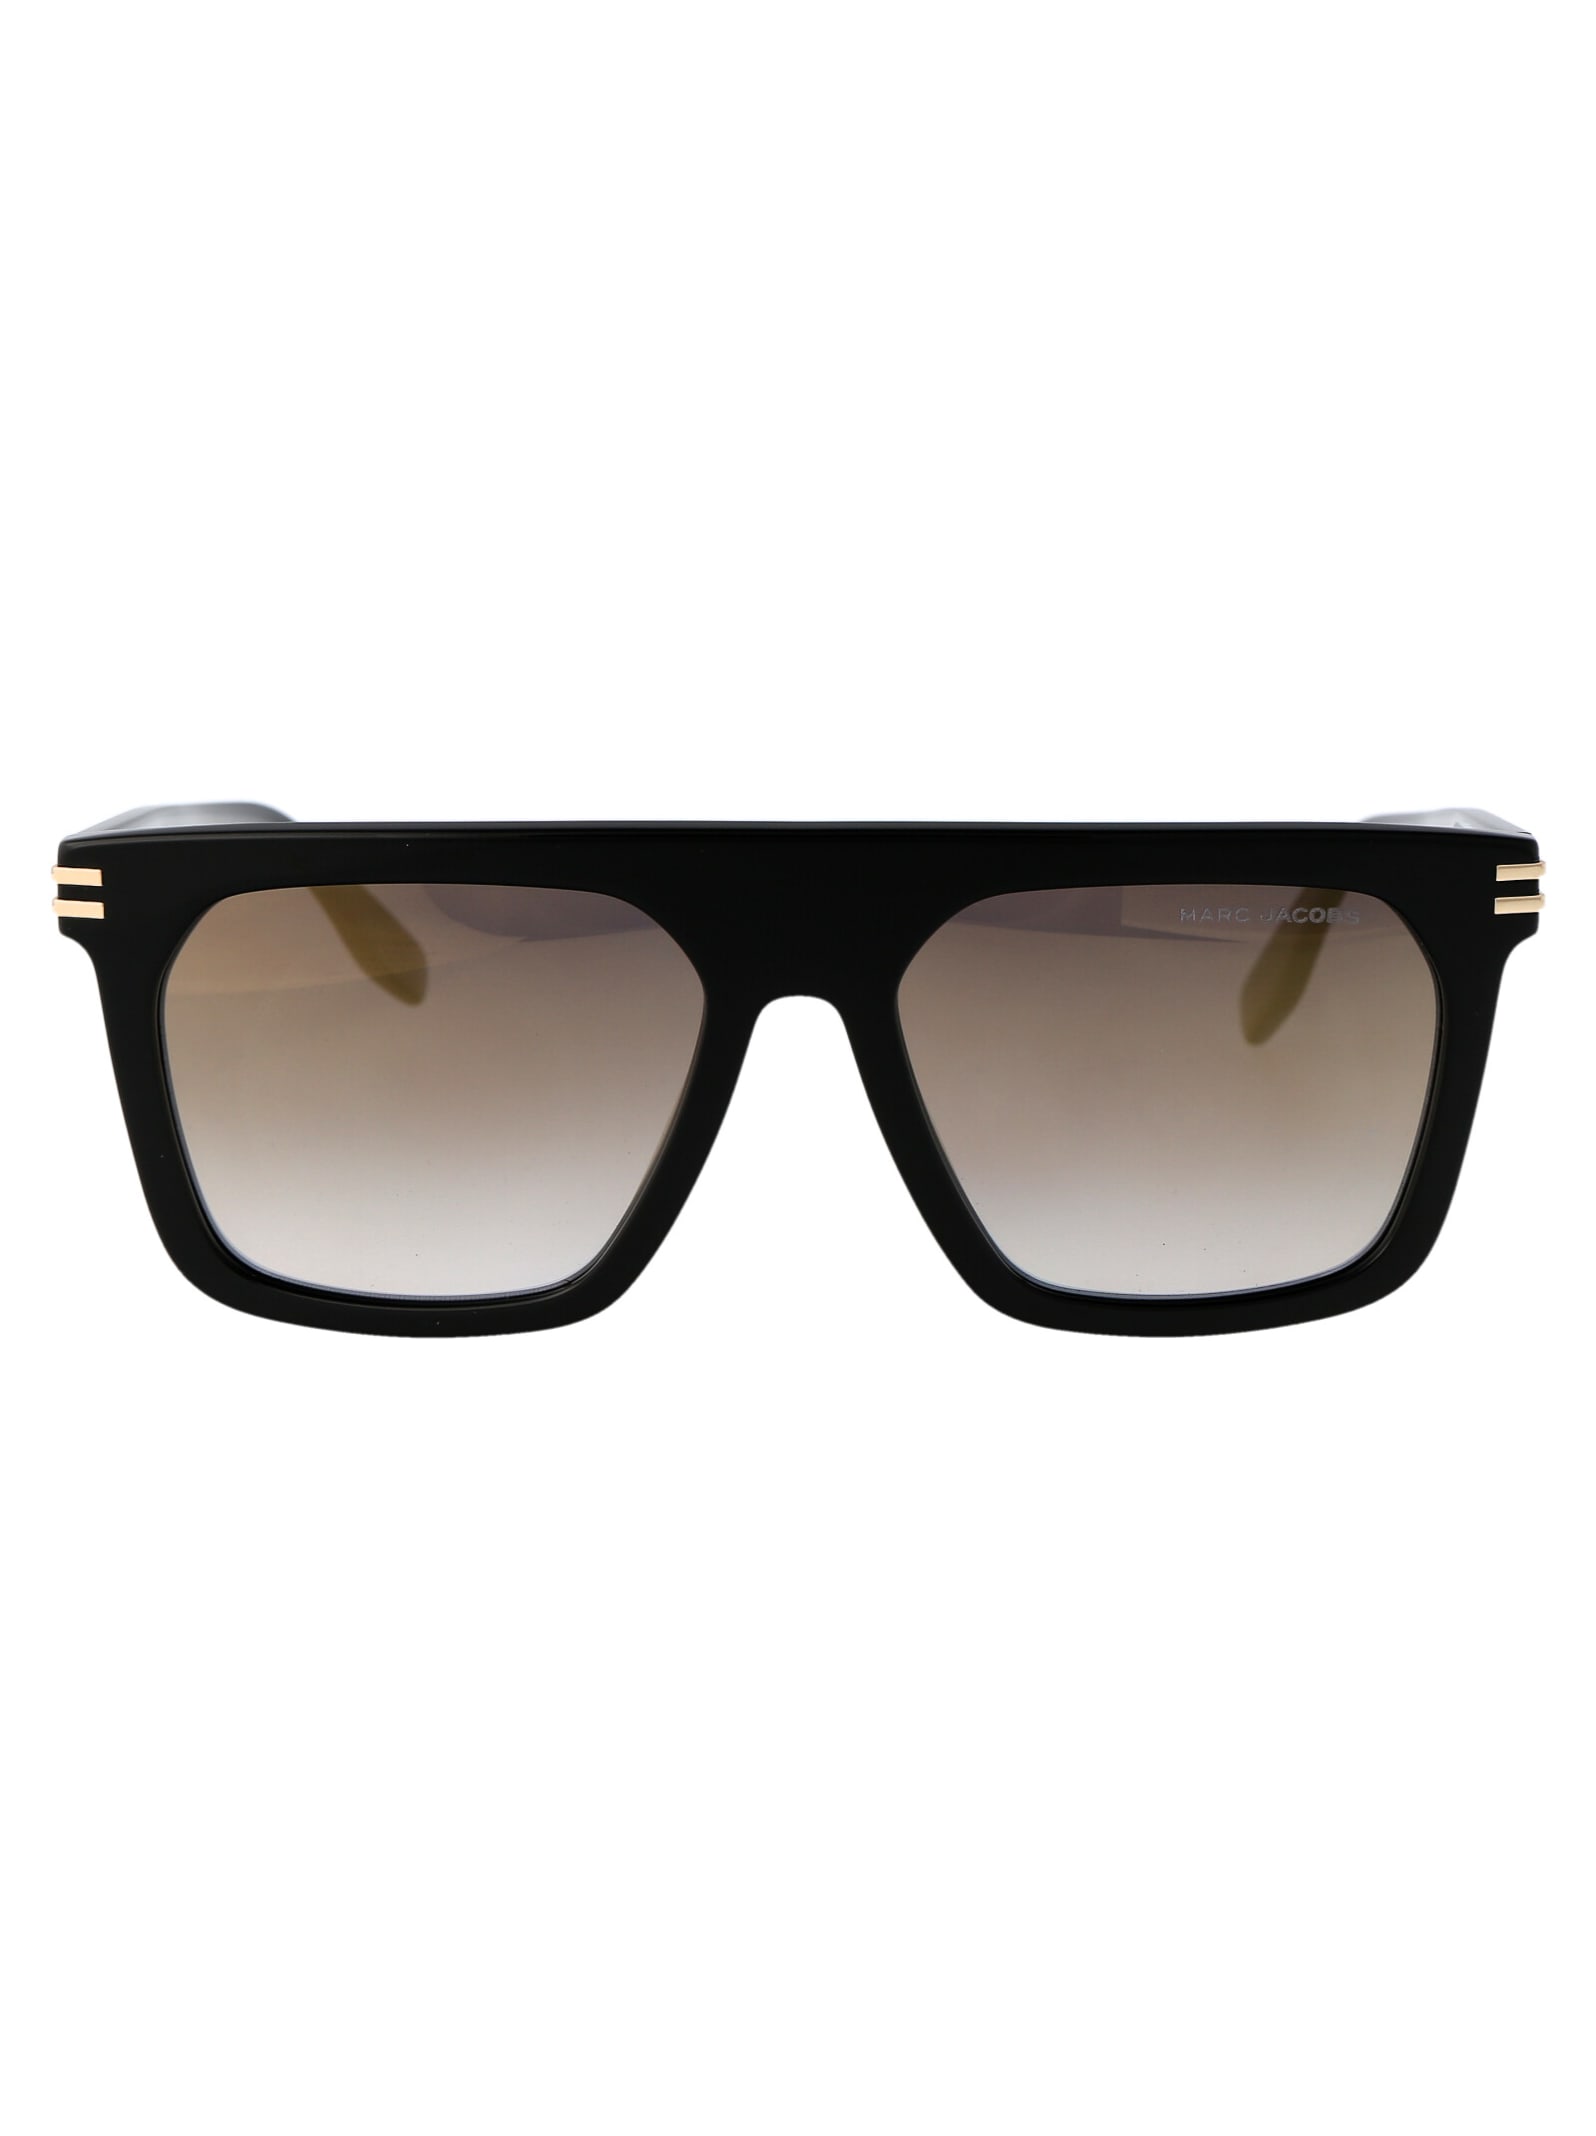 Marc 680/s Sunglasses